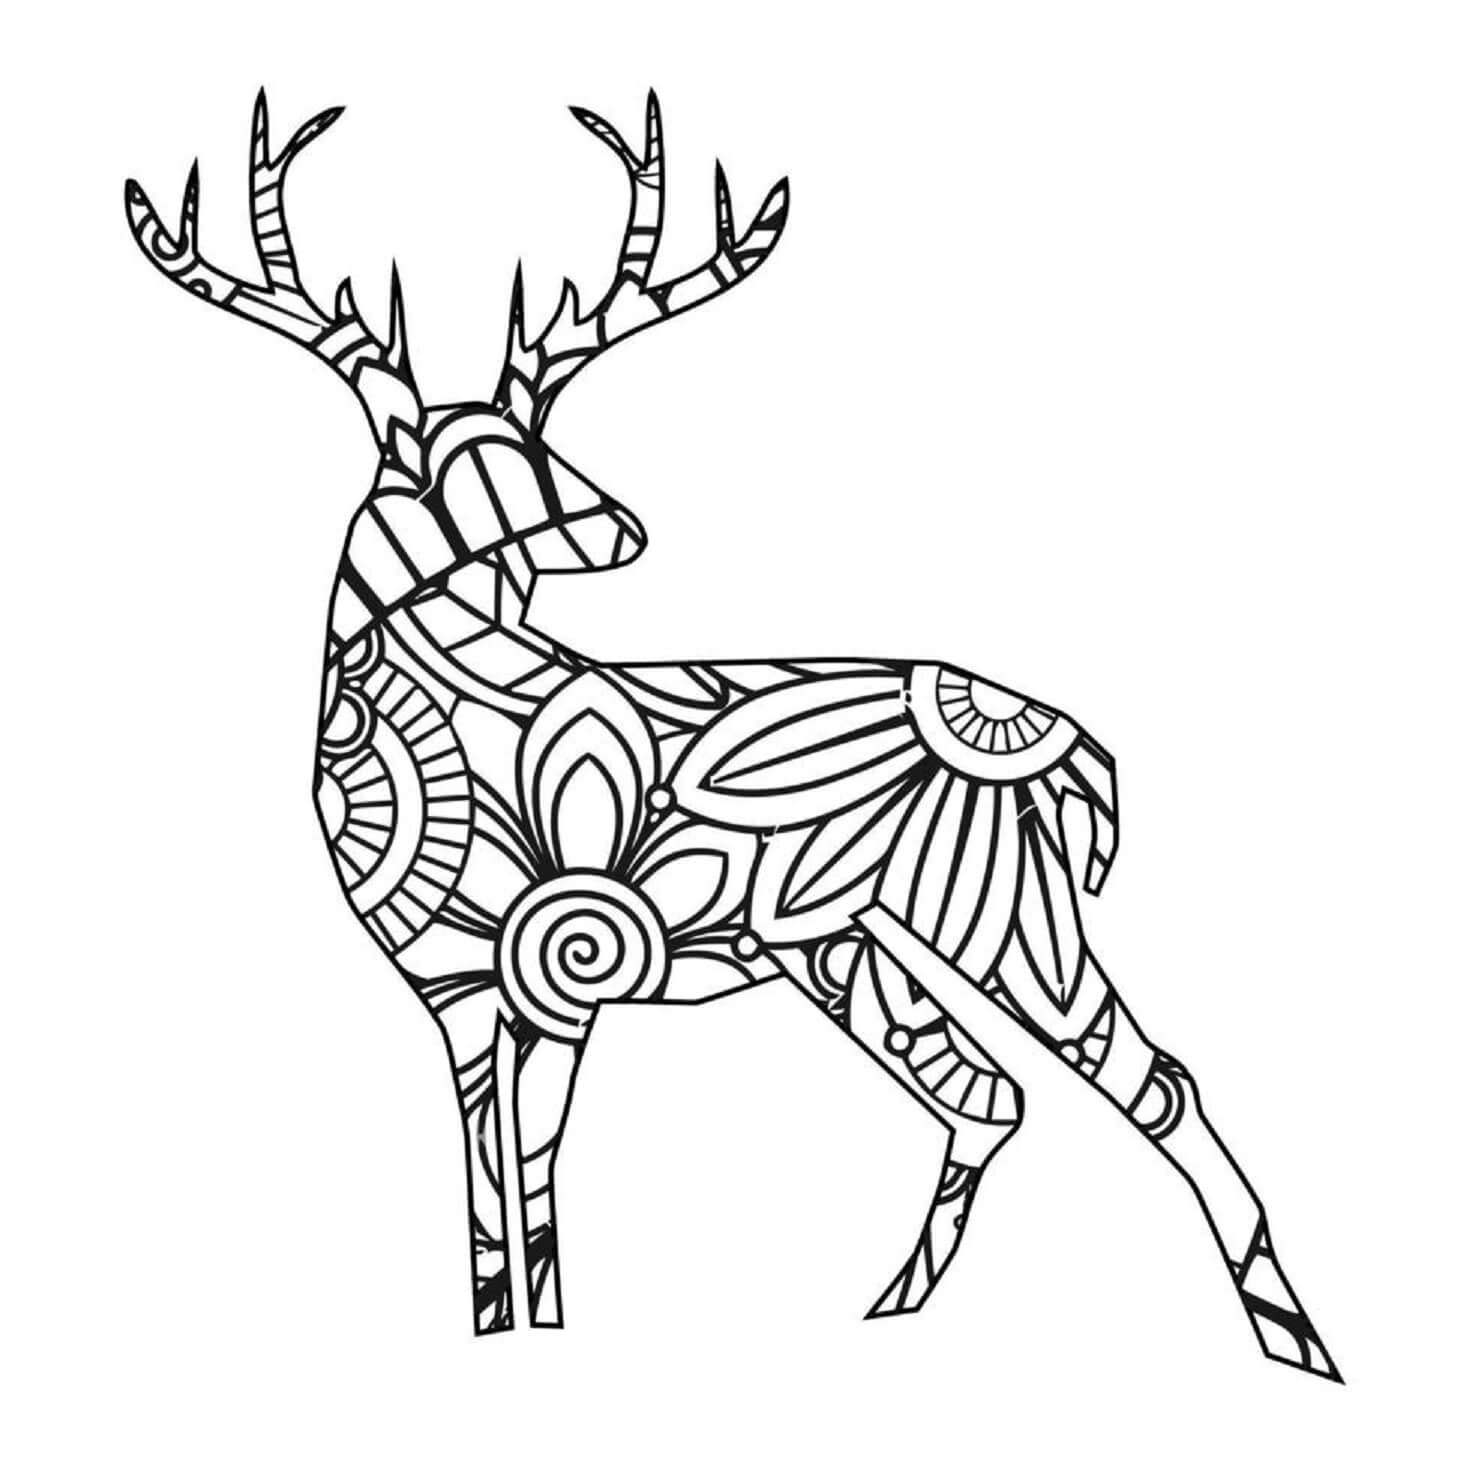 Mandala Deer Coloring Page – Sheet 3 Mandala